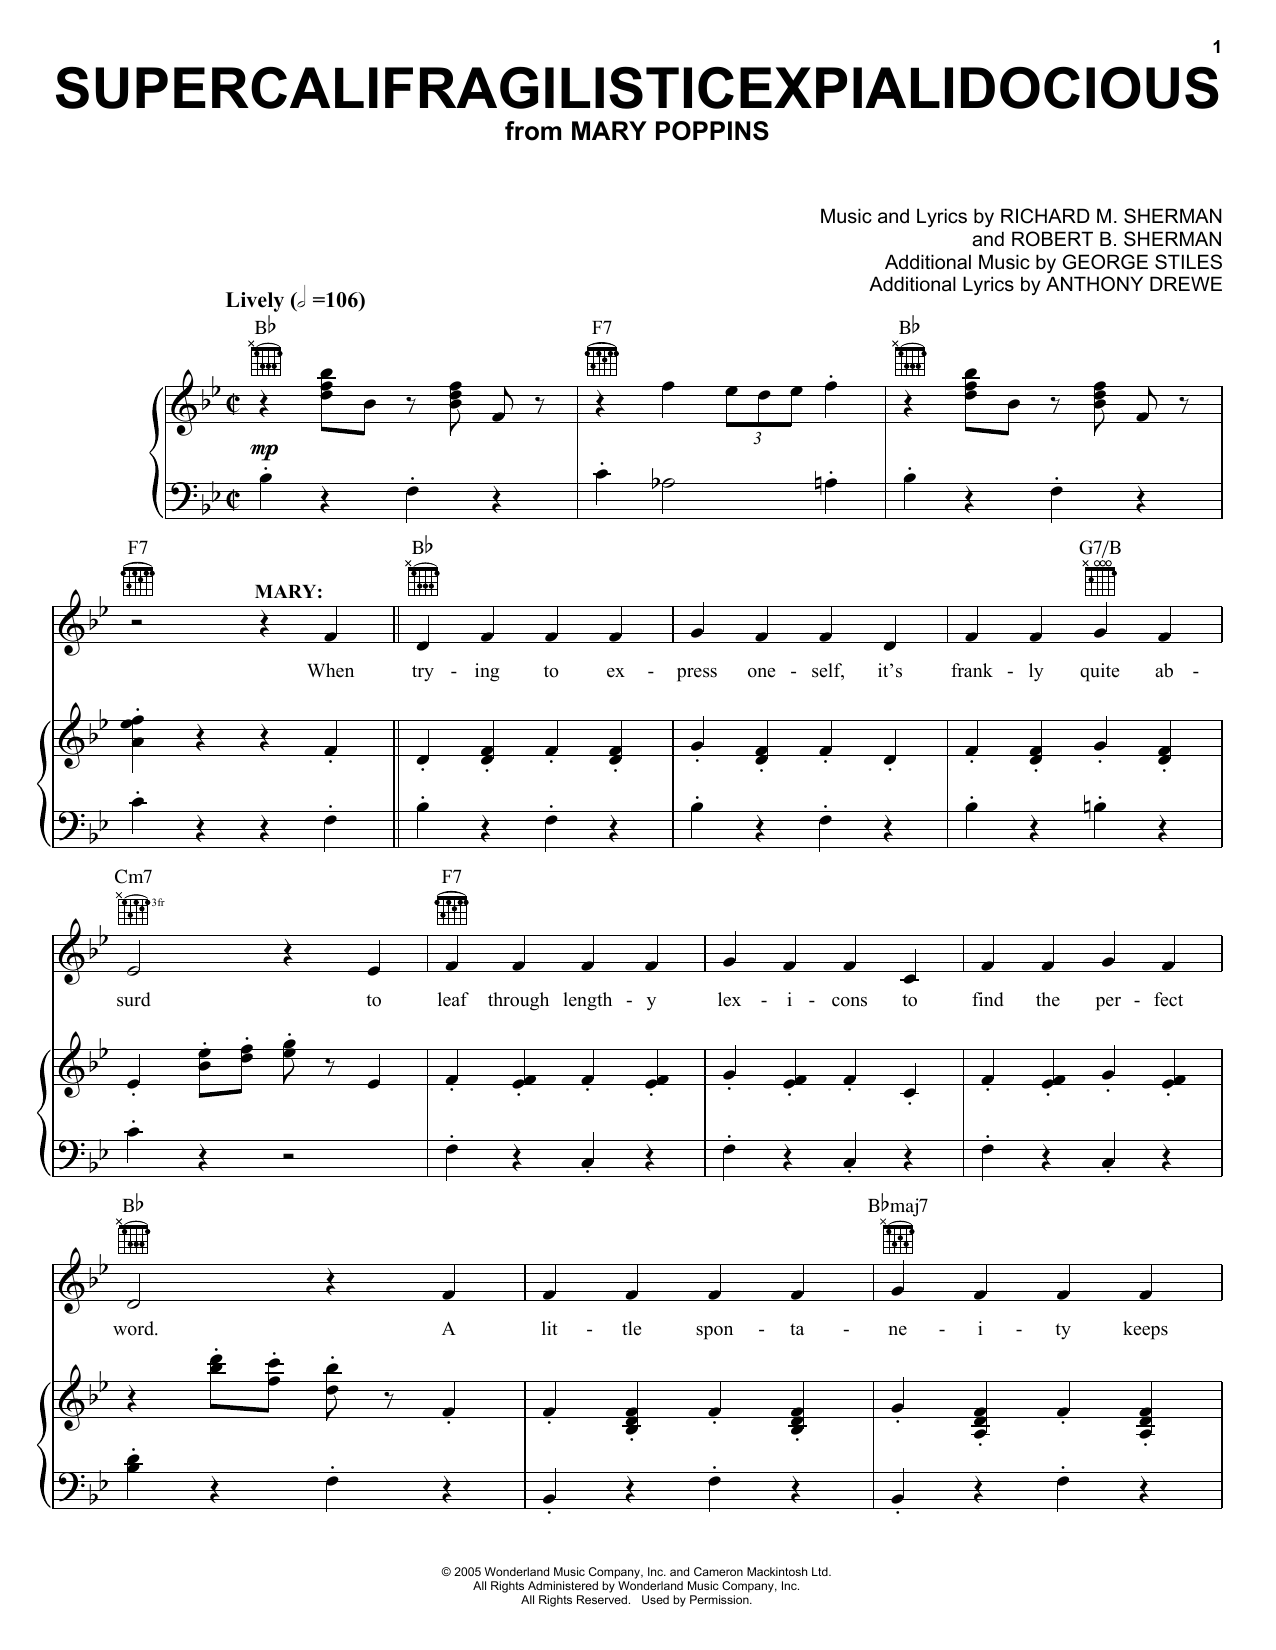 Sherman Brothers Supercalifragilisticexpialidocious (from Mary Poppins) Sheet Music Notes & Chords for Ukulele Chords/Lyrics - Download or Print PDF